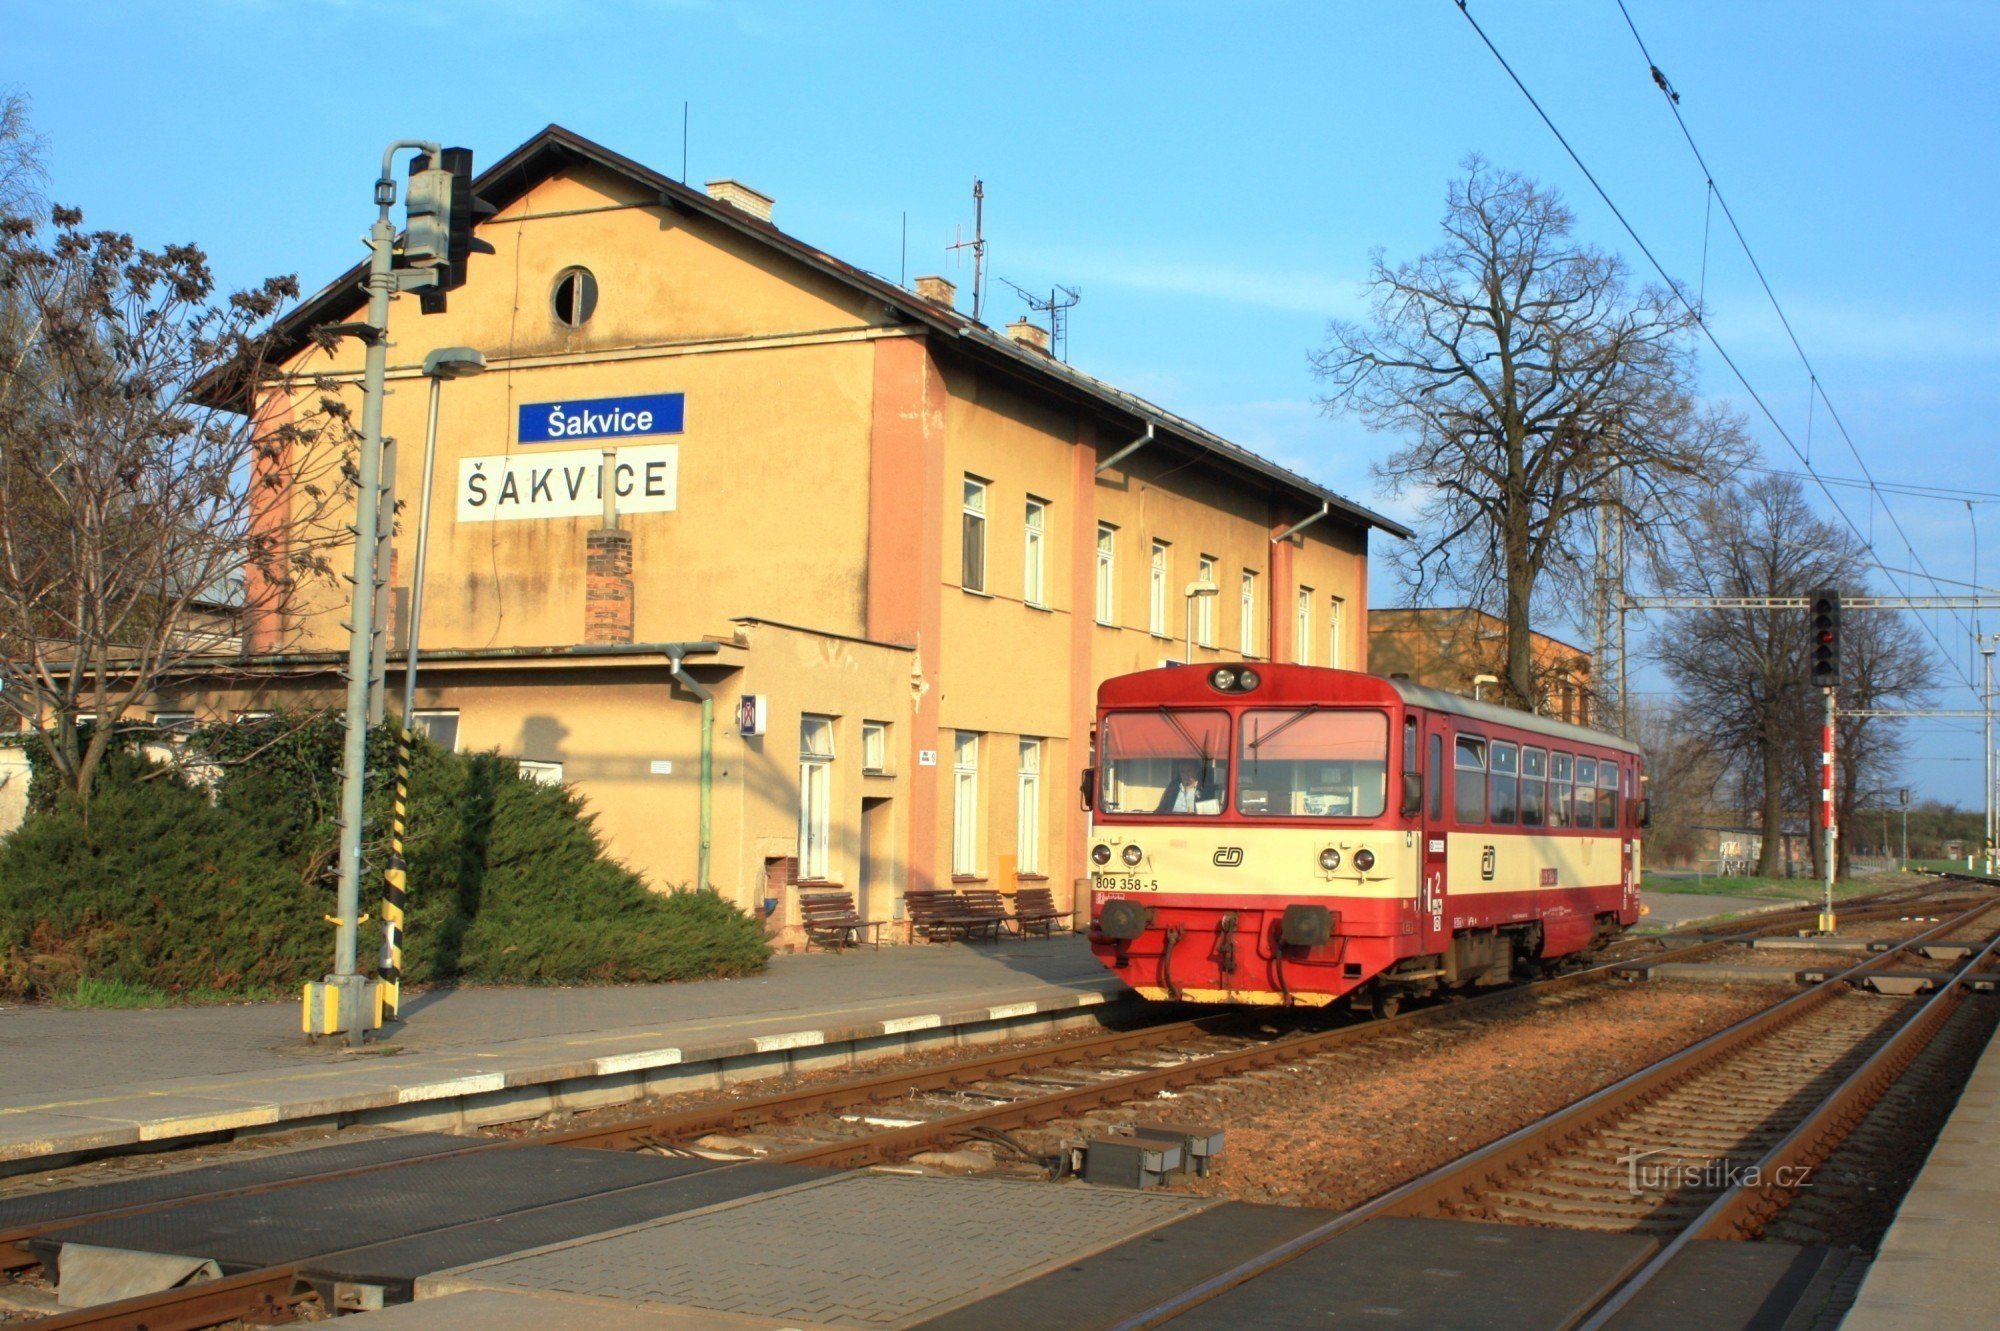 Šakvice järnvägsstation